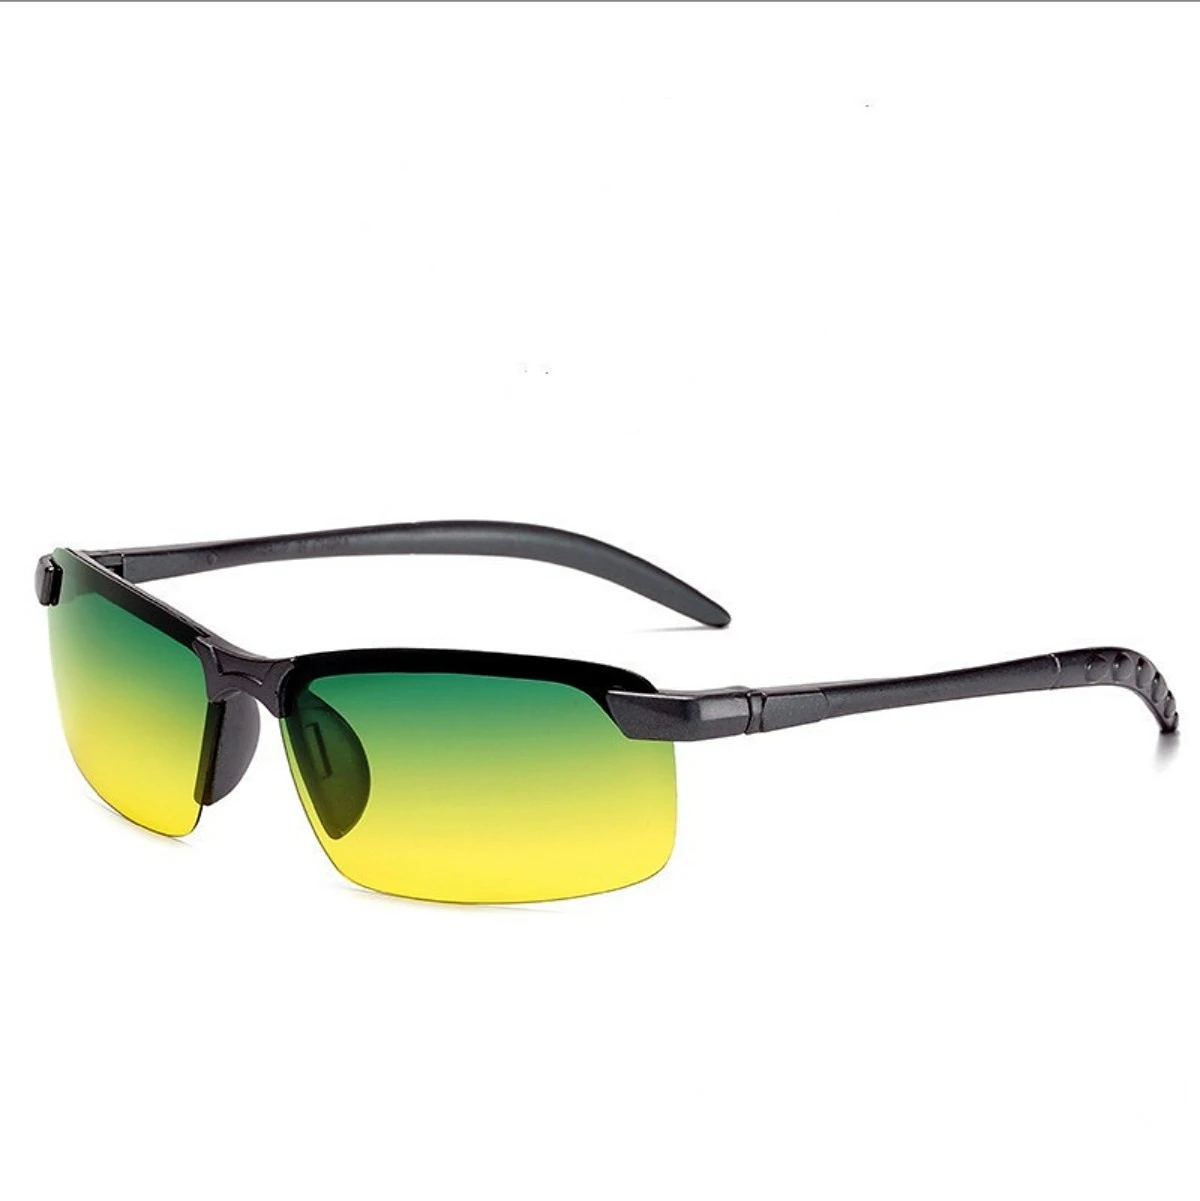  - Universal Night Vision Glasses Sunglasses Men Outdoor Sport Sun Glasses Driver Goggles Black/Yellow Glasses for Night Driving